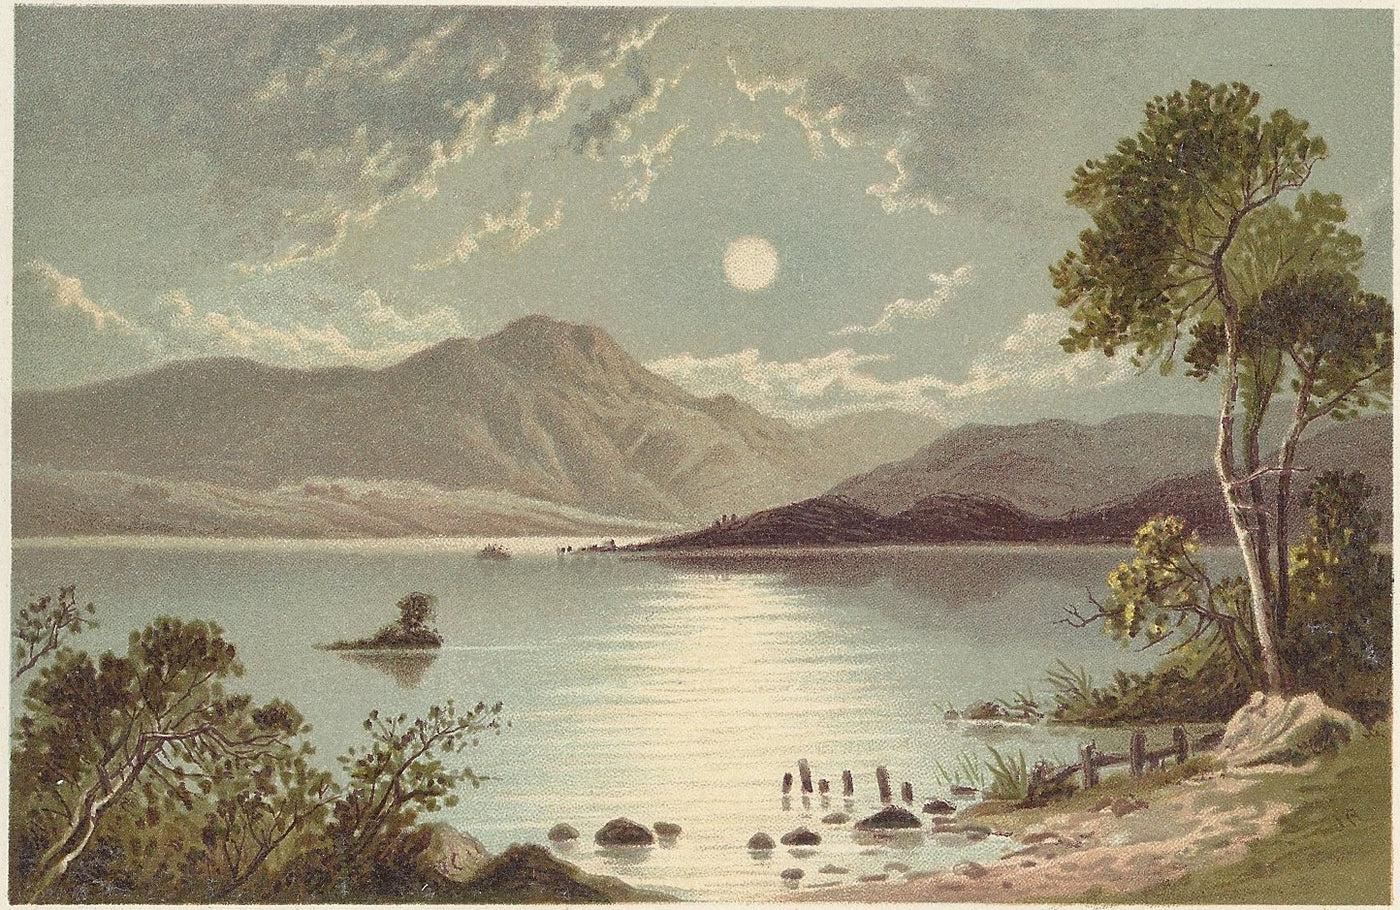 Loch Venachar or Vennachar Scotland guaranteed antique print 1889